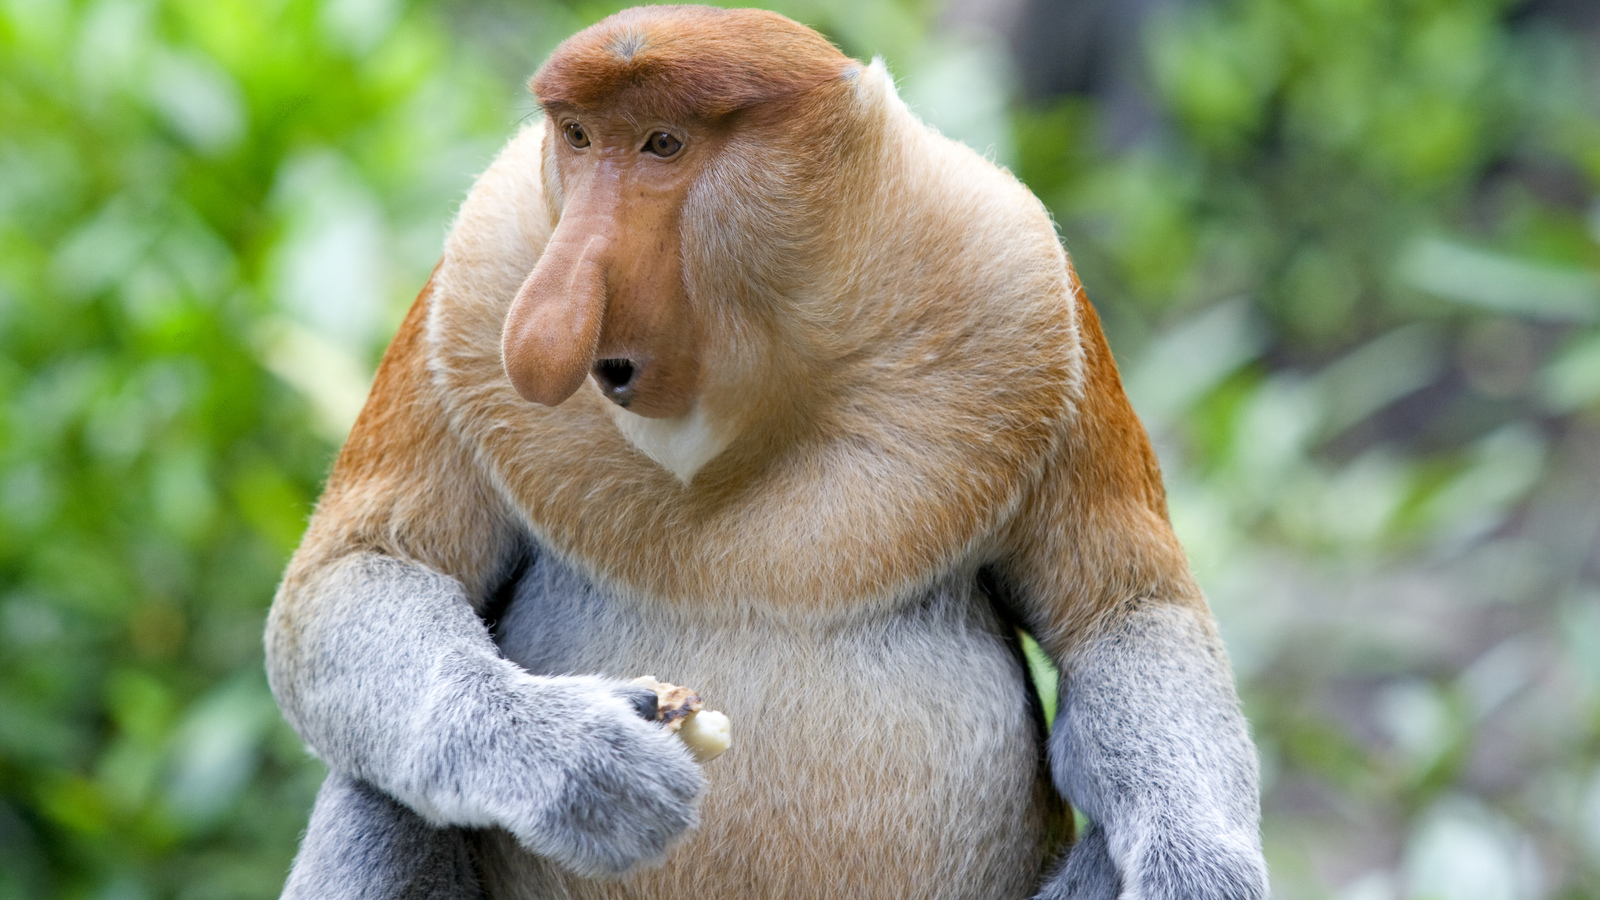 HQ Proboscis Monkey Background